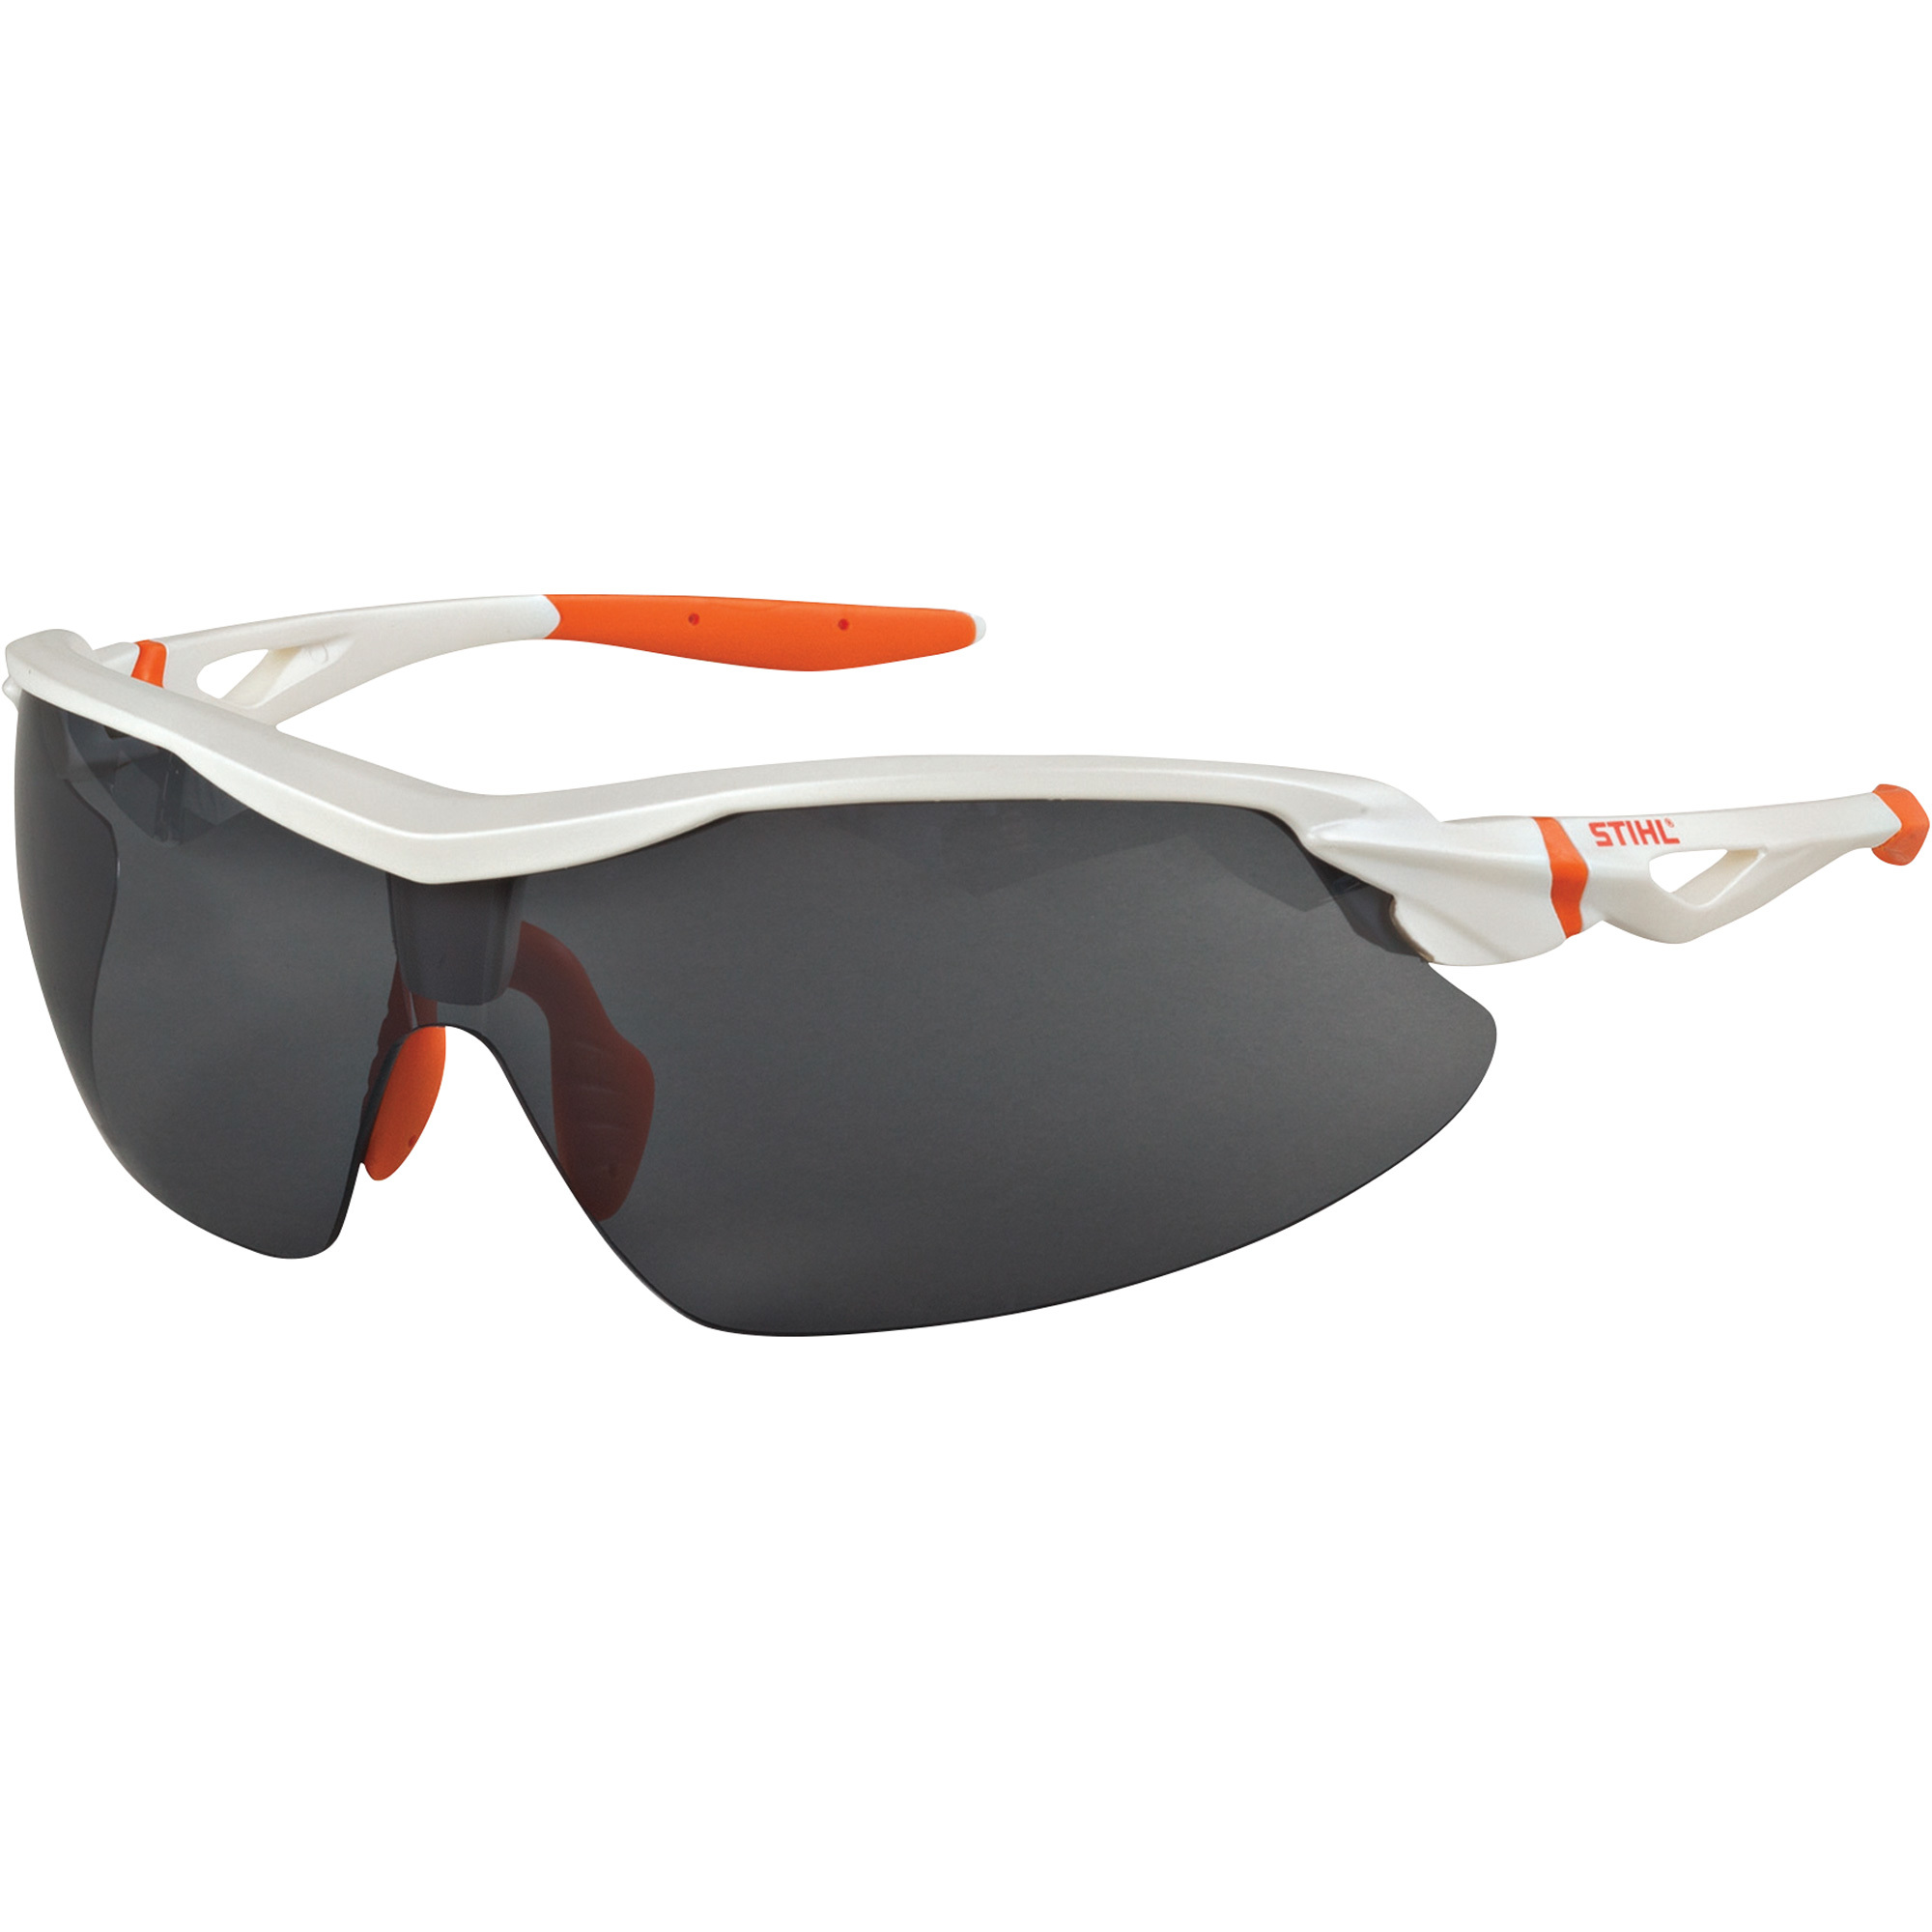 STIHL 2-Tone Sport Safety Glasses, Smoke Lenses, Model 7010 884 0369